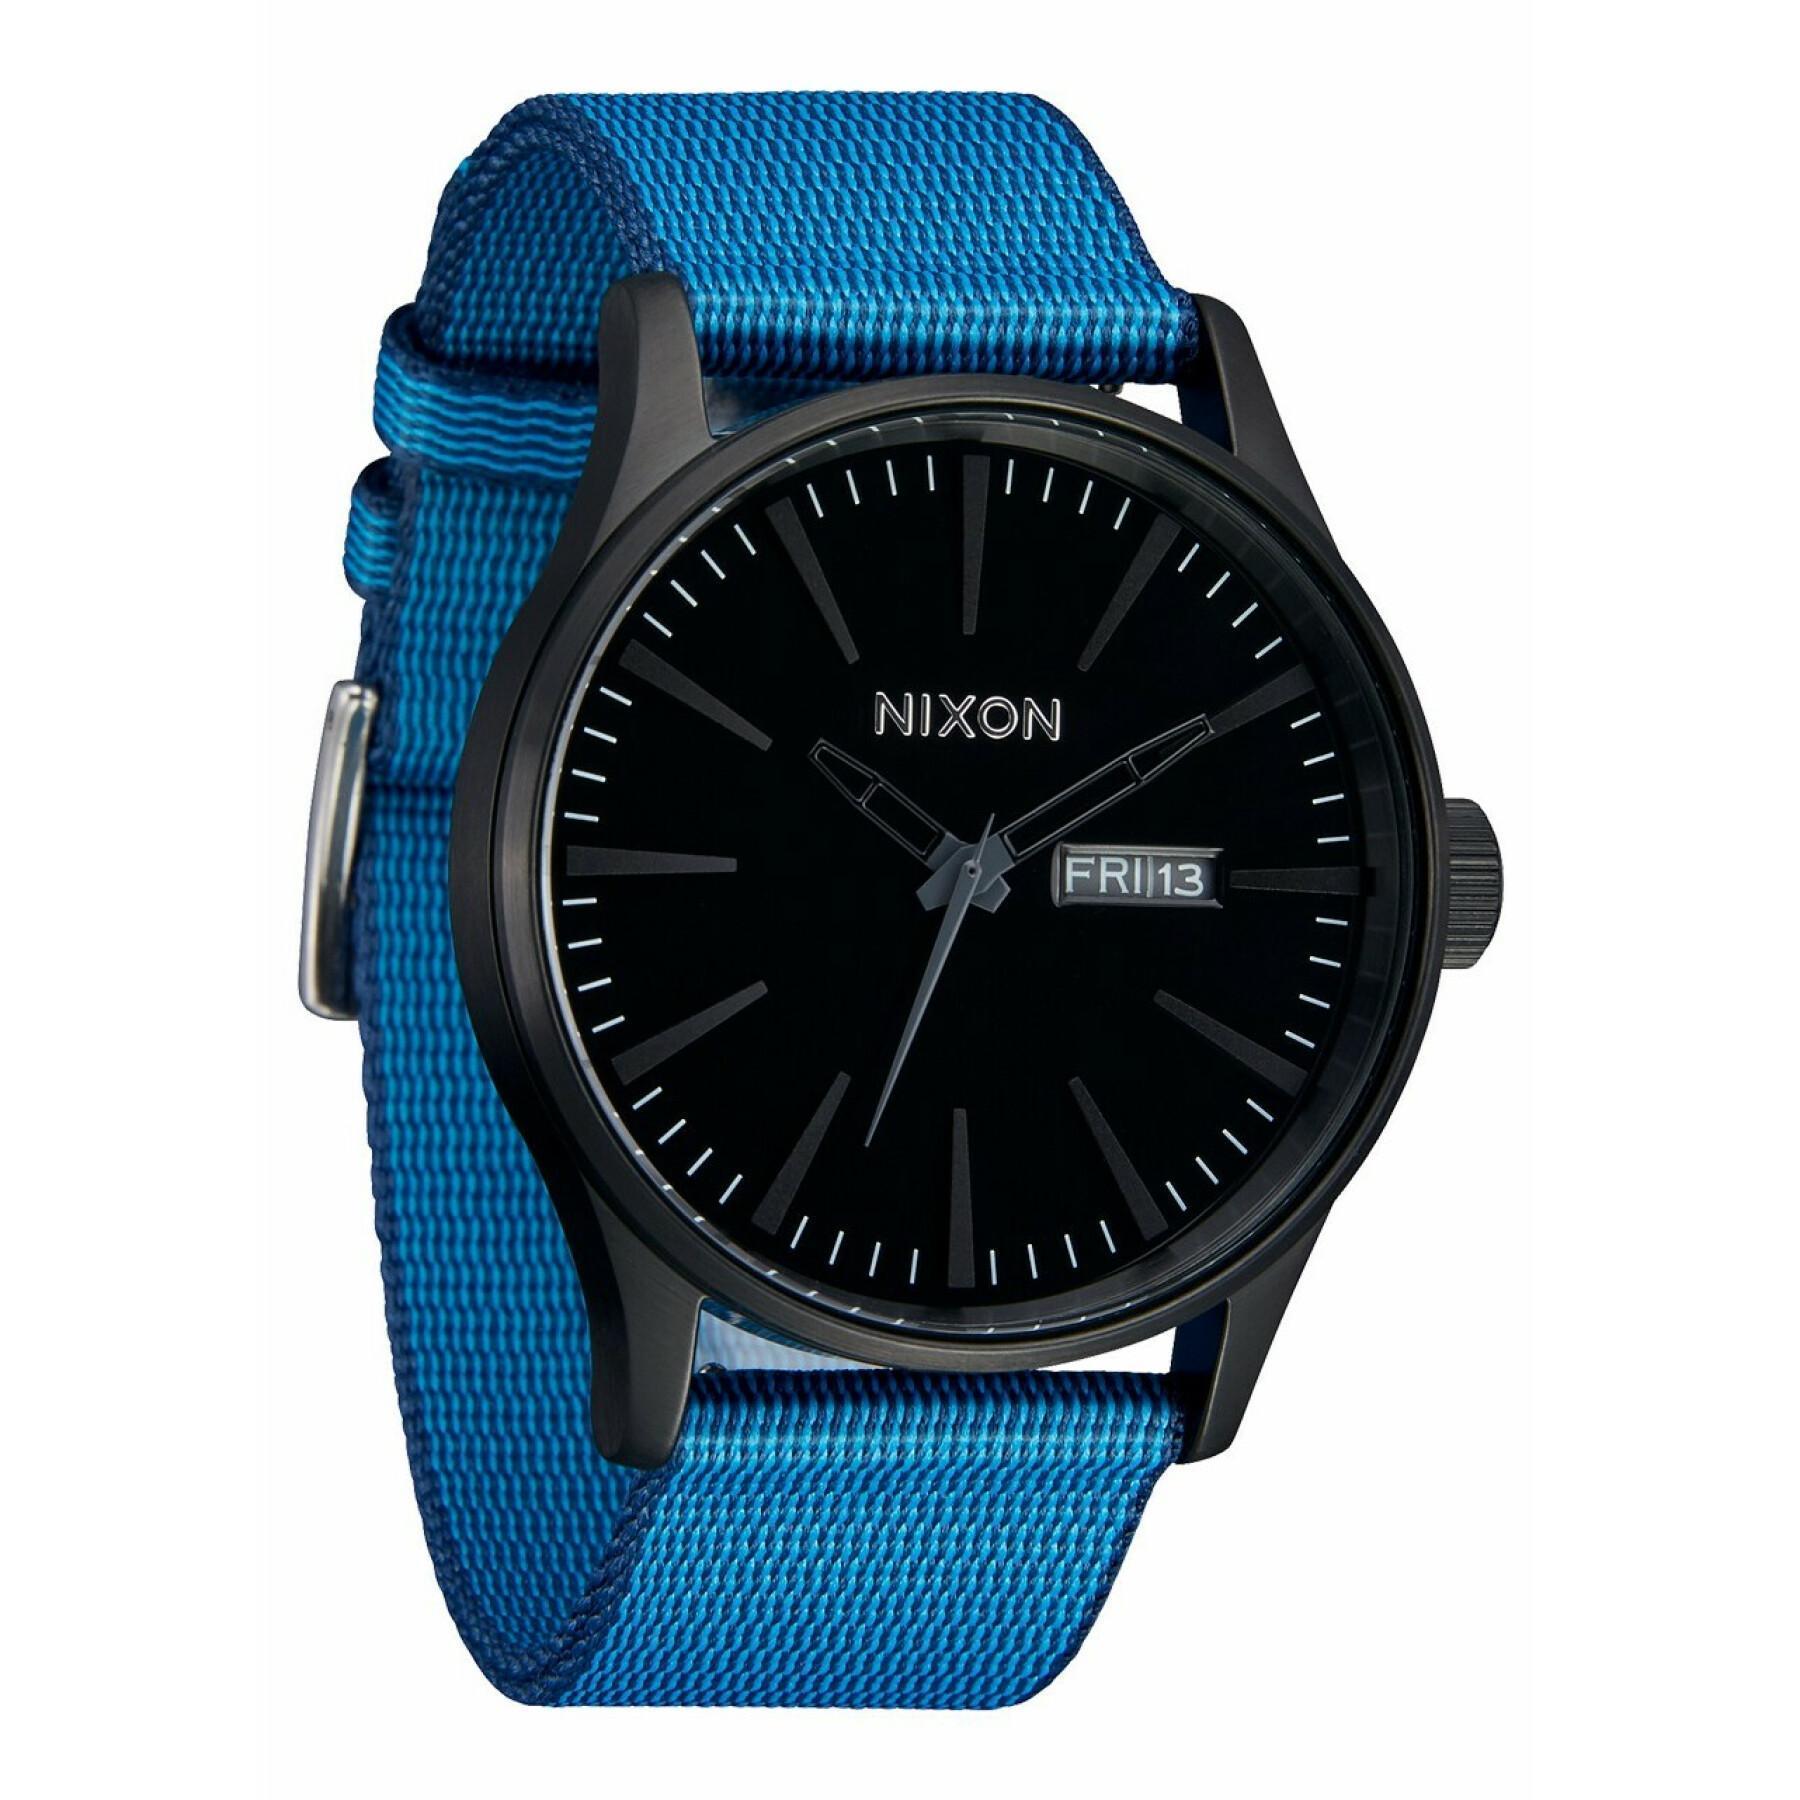 Bracelet de montre nylon Nixon #Tide